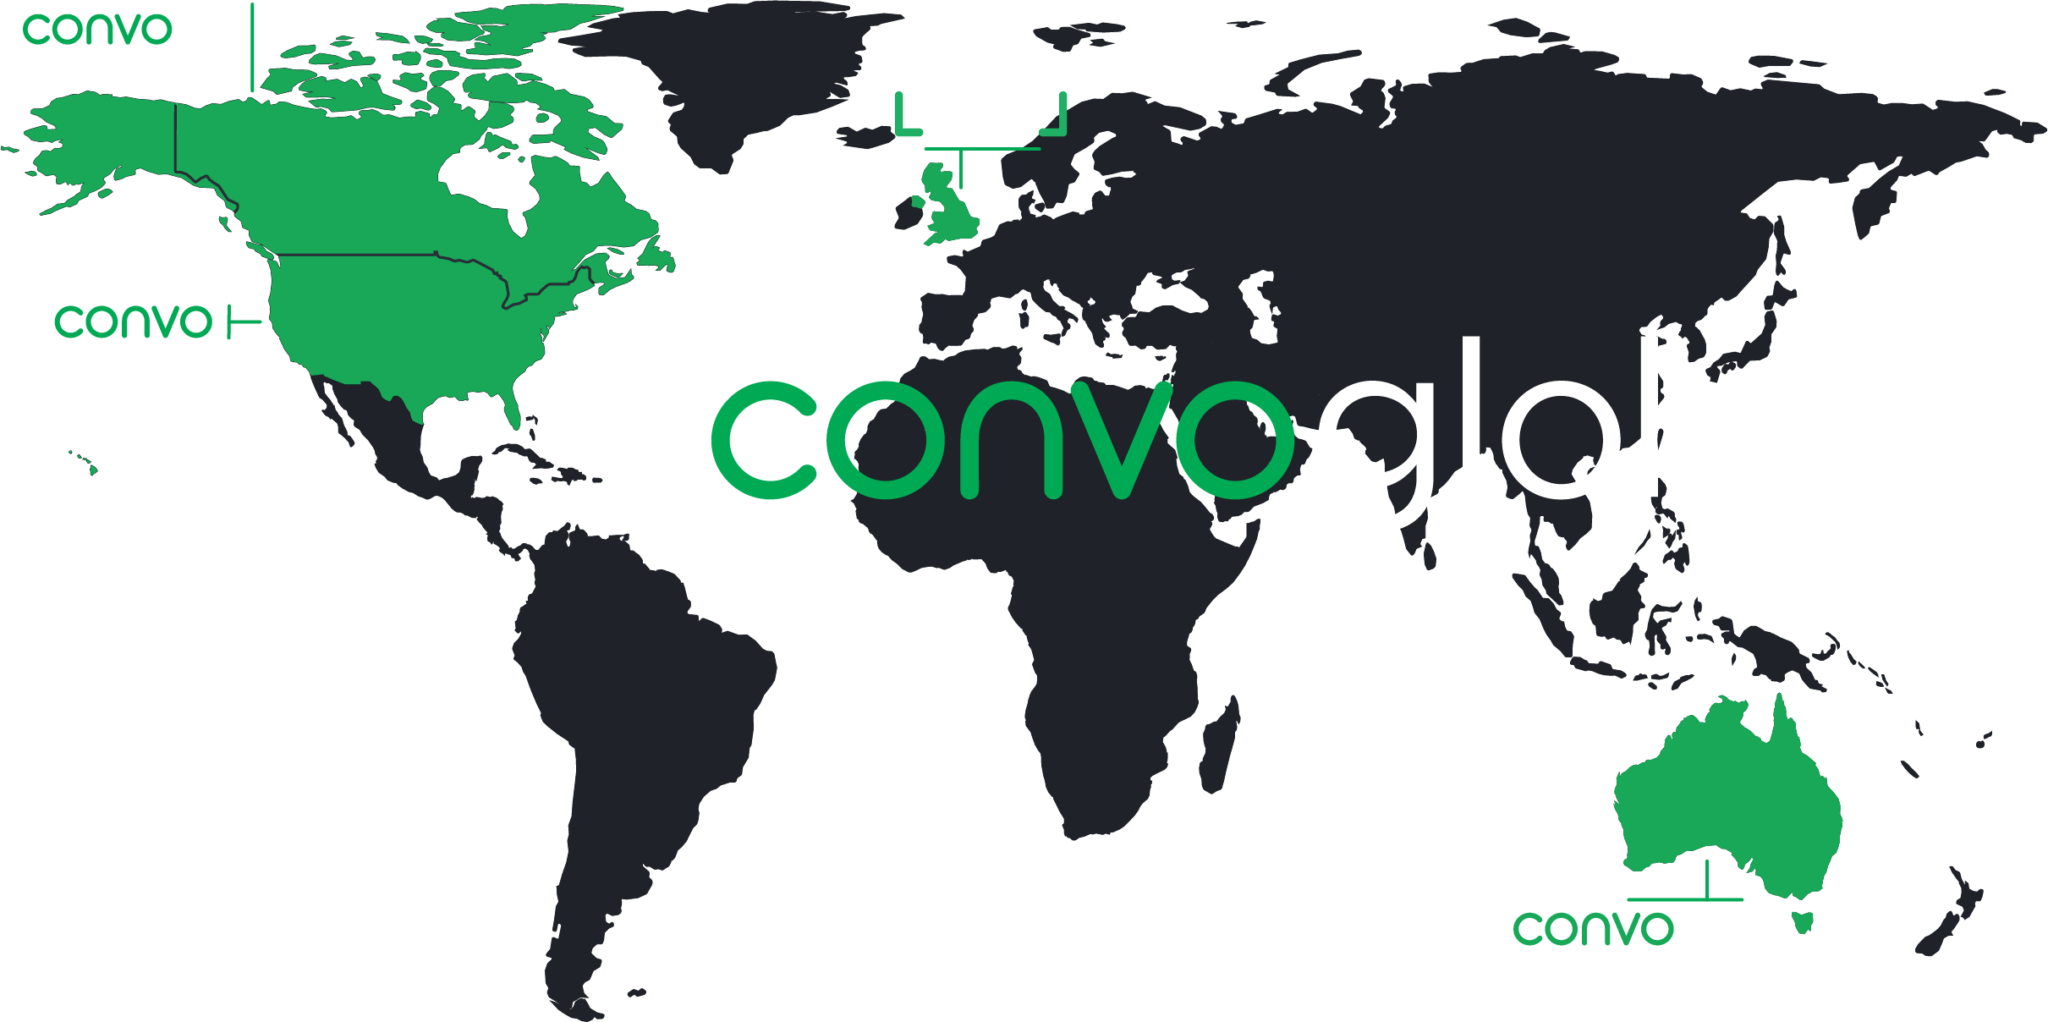 Convo Global Map on Dark